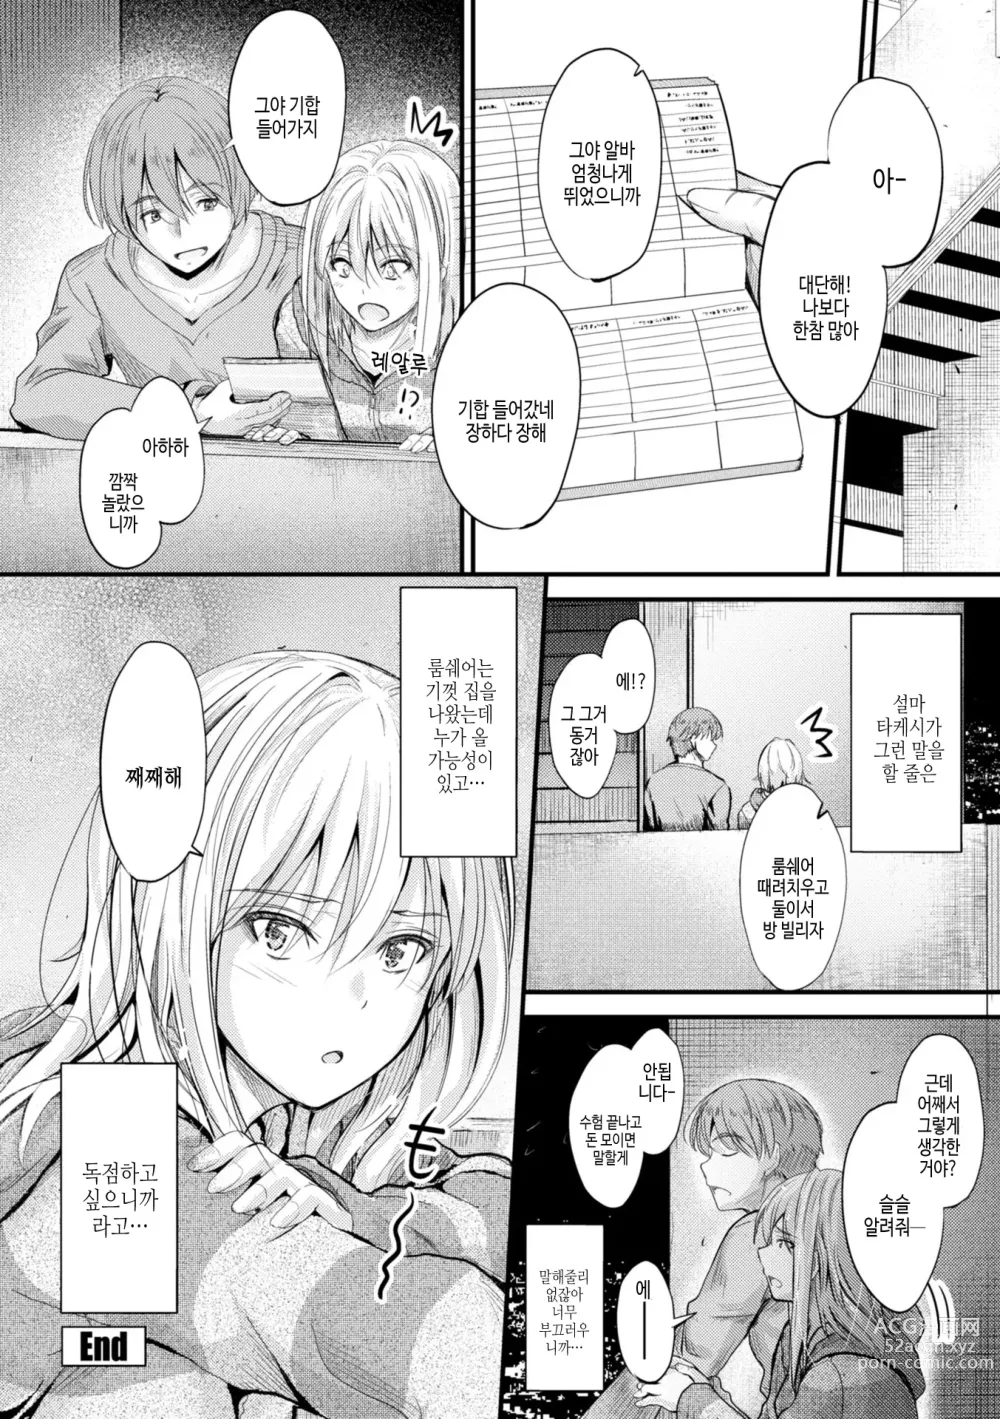 Page 202 of manga 어느쪽 질내가 좋아?